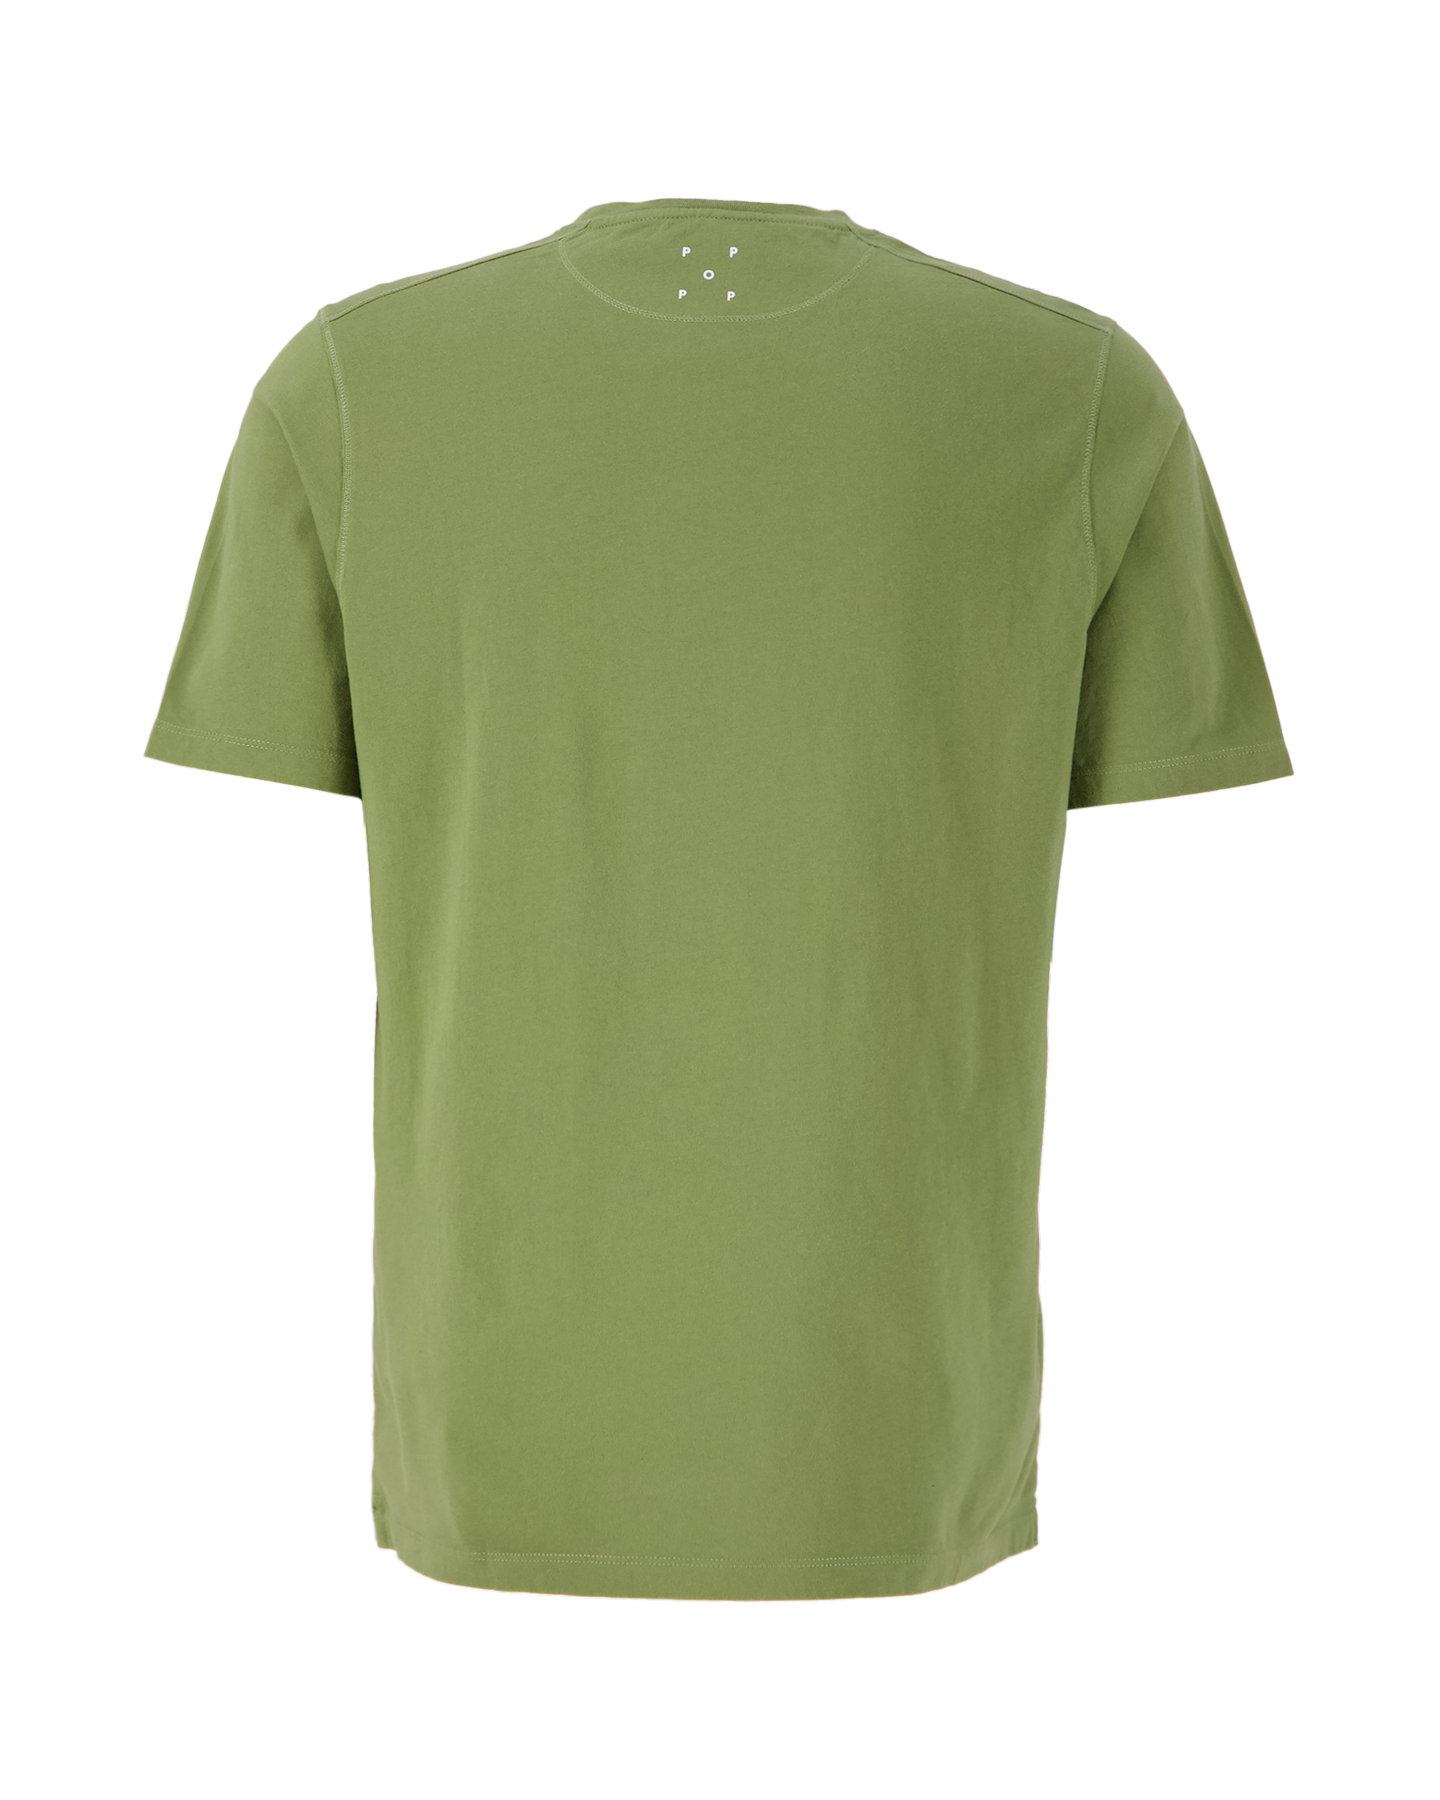 POP Trading Company Trading T-Shirt GROEN 2